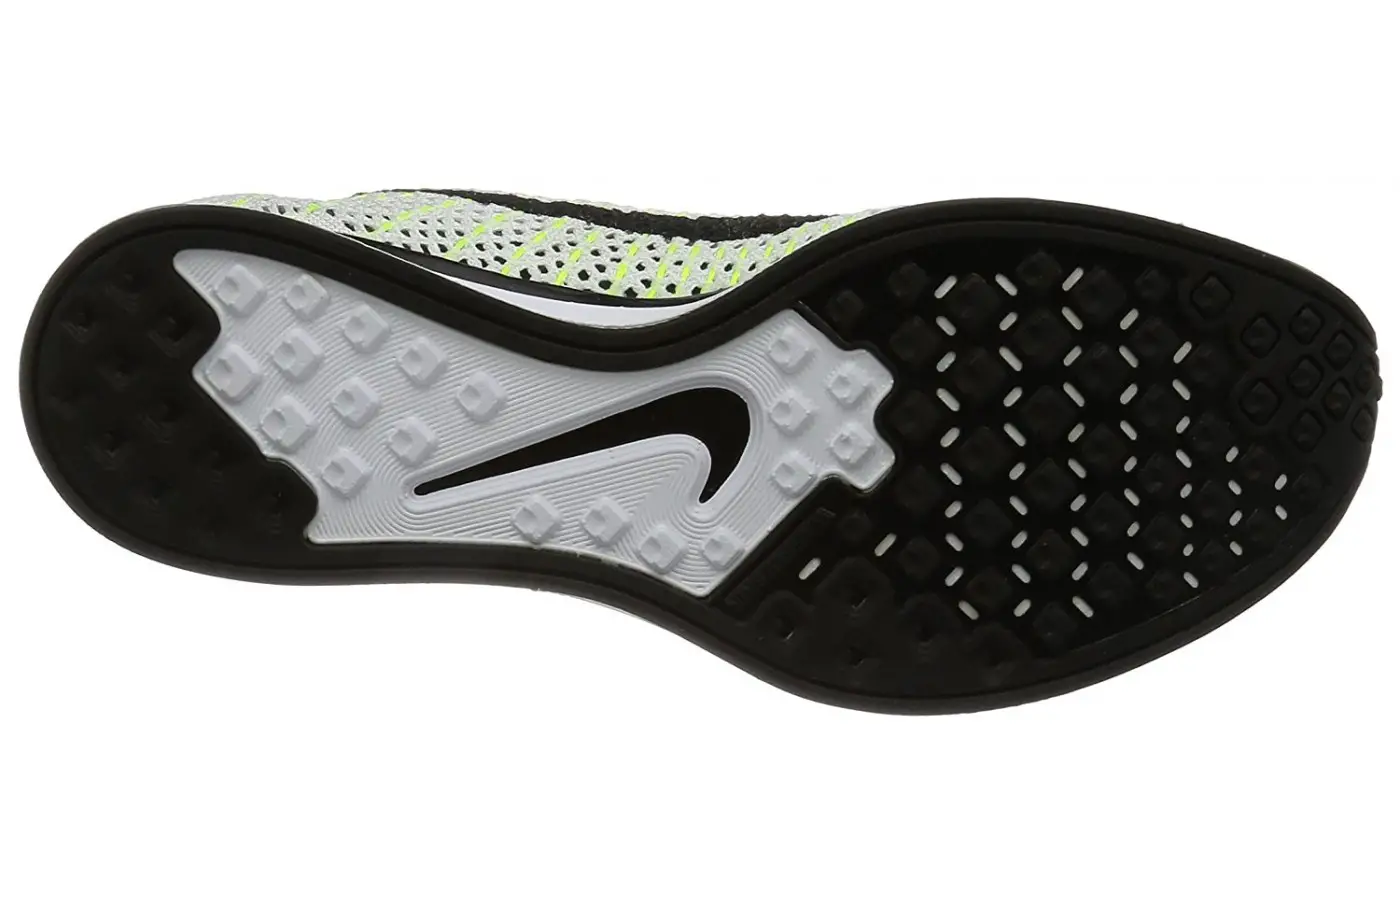 Bottom view of the Nike Flyknit Racer running shoe